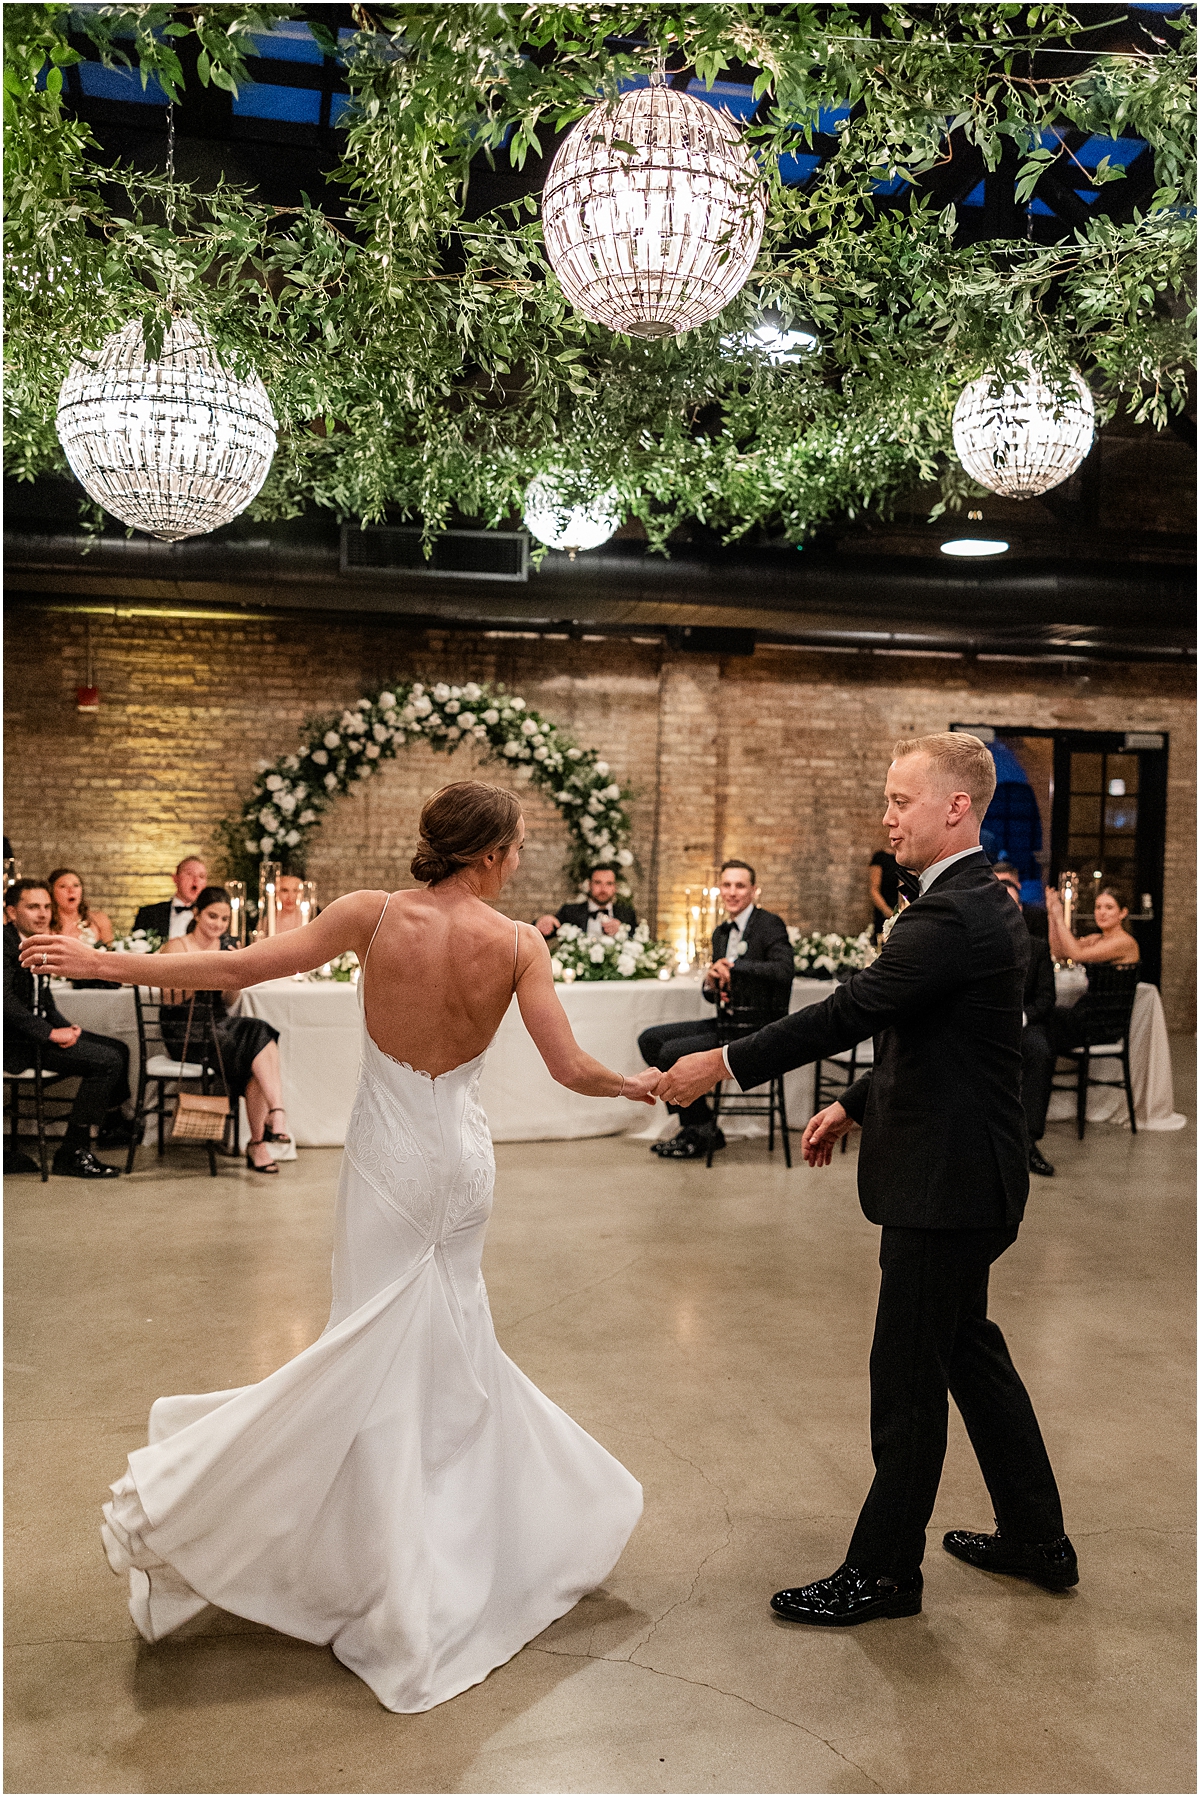 newlyweds dancing at wedding reception